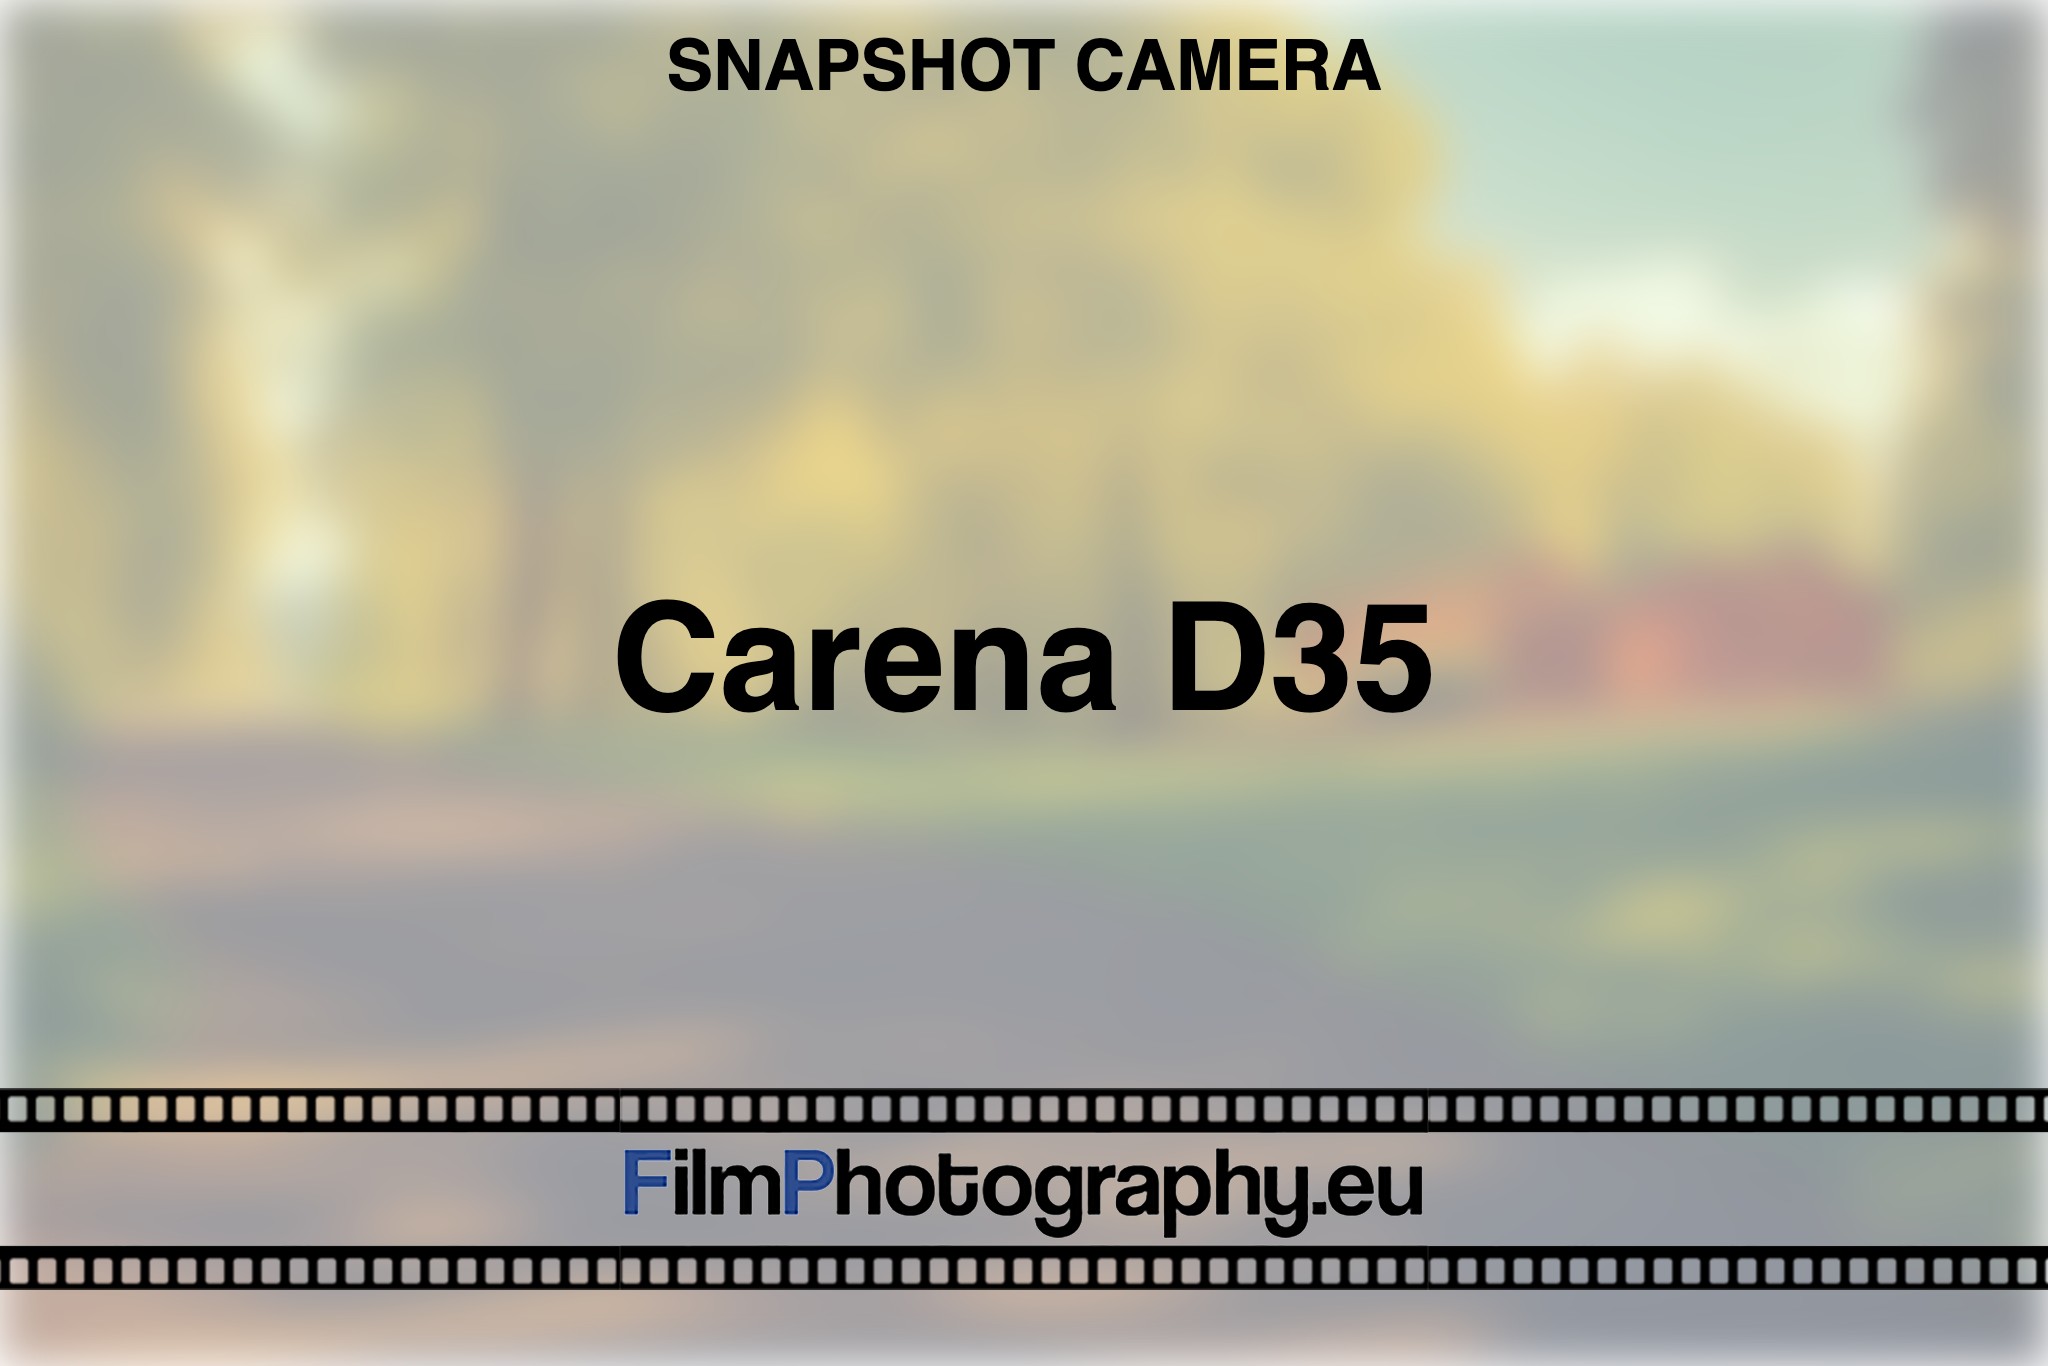 carena-d35-snapshot-camera-bnv